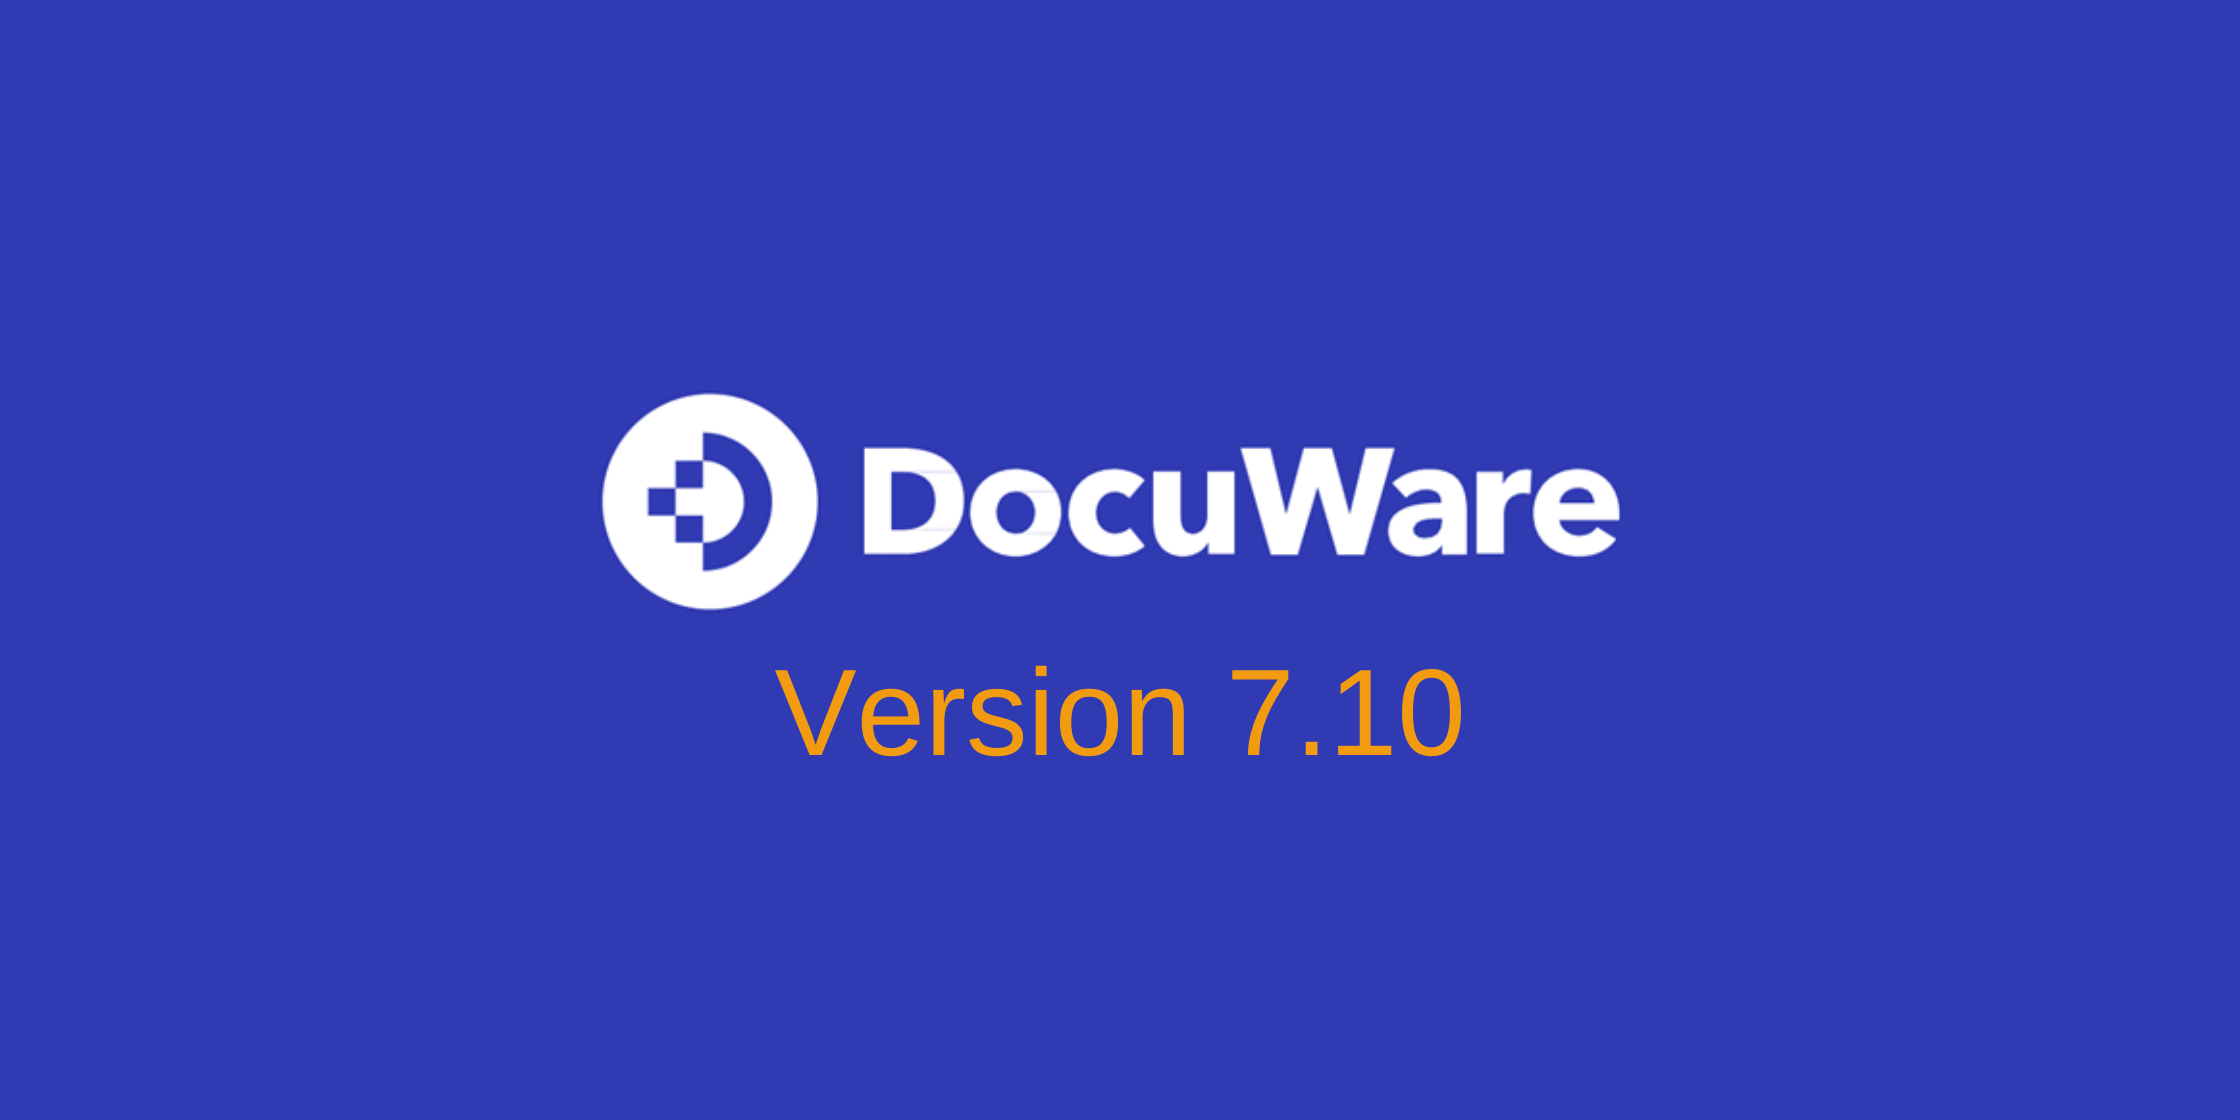 DocuWare's Latest Release - DocuWare 7.10